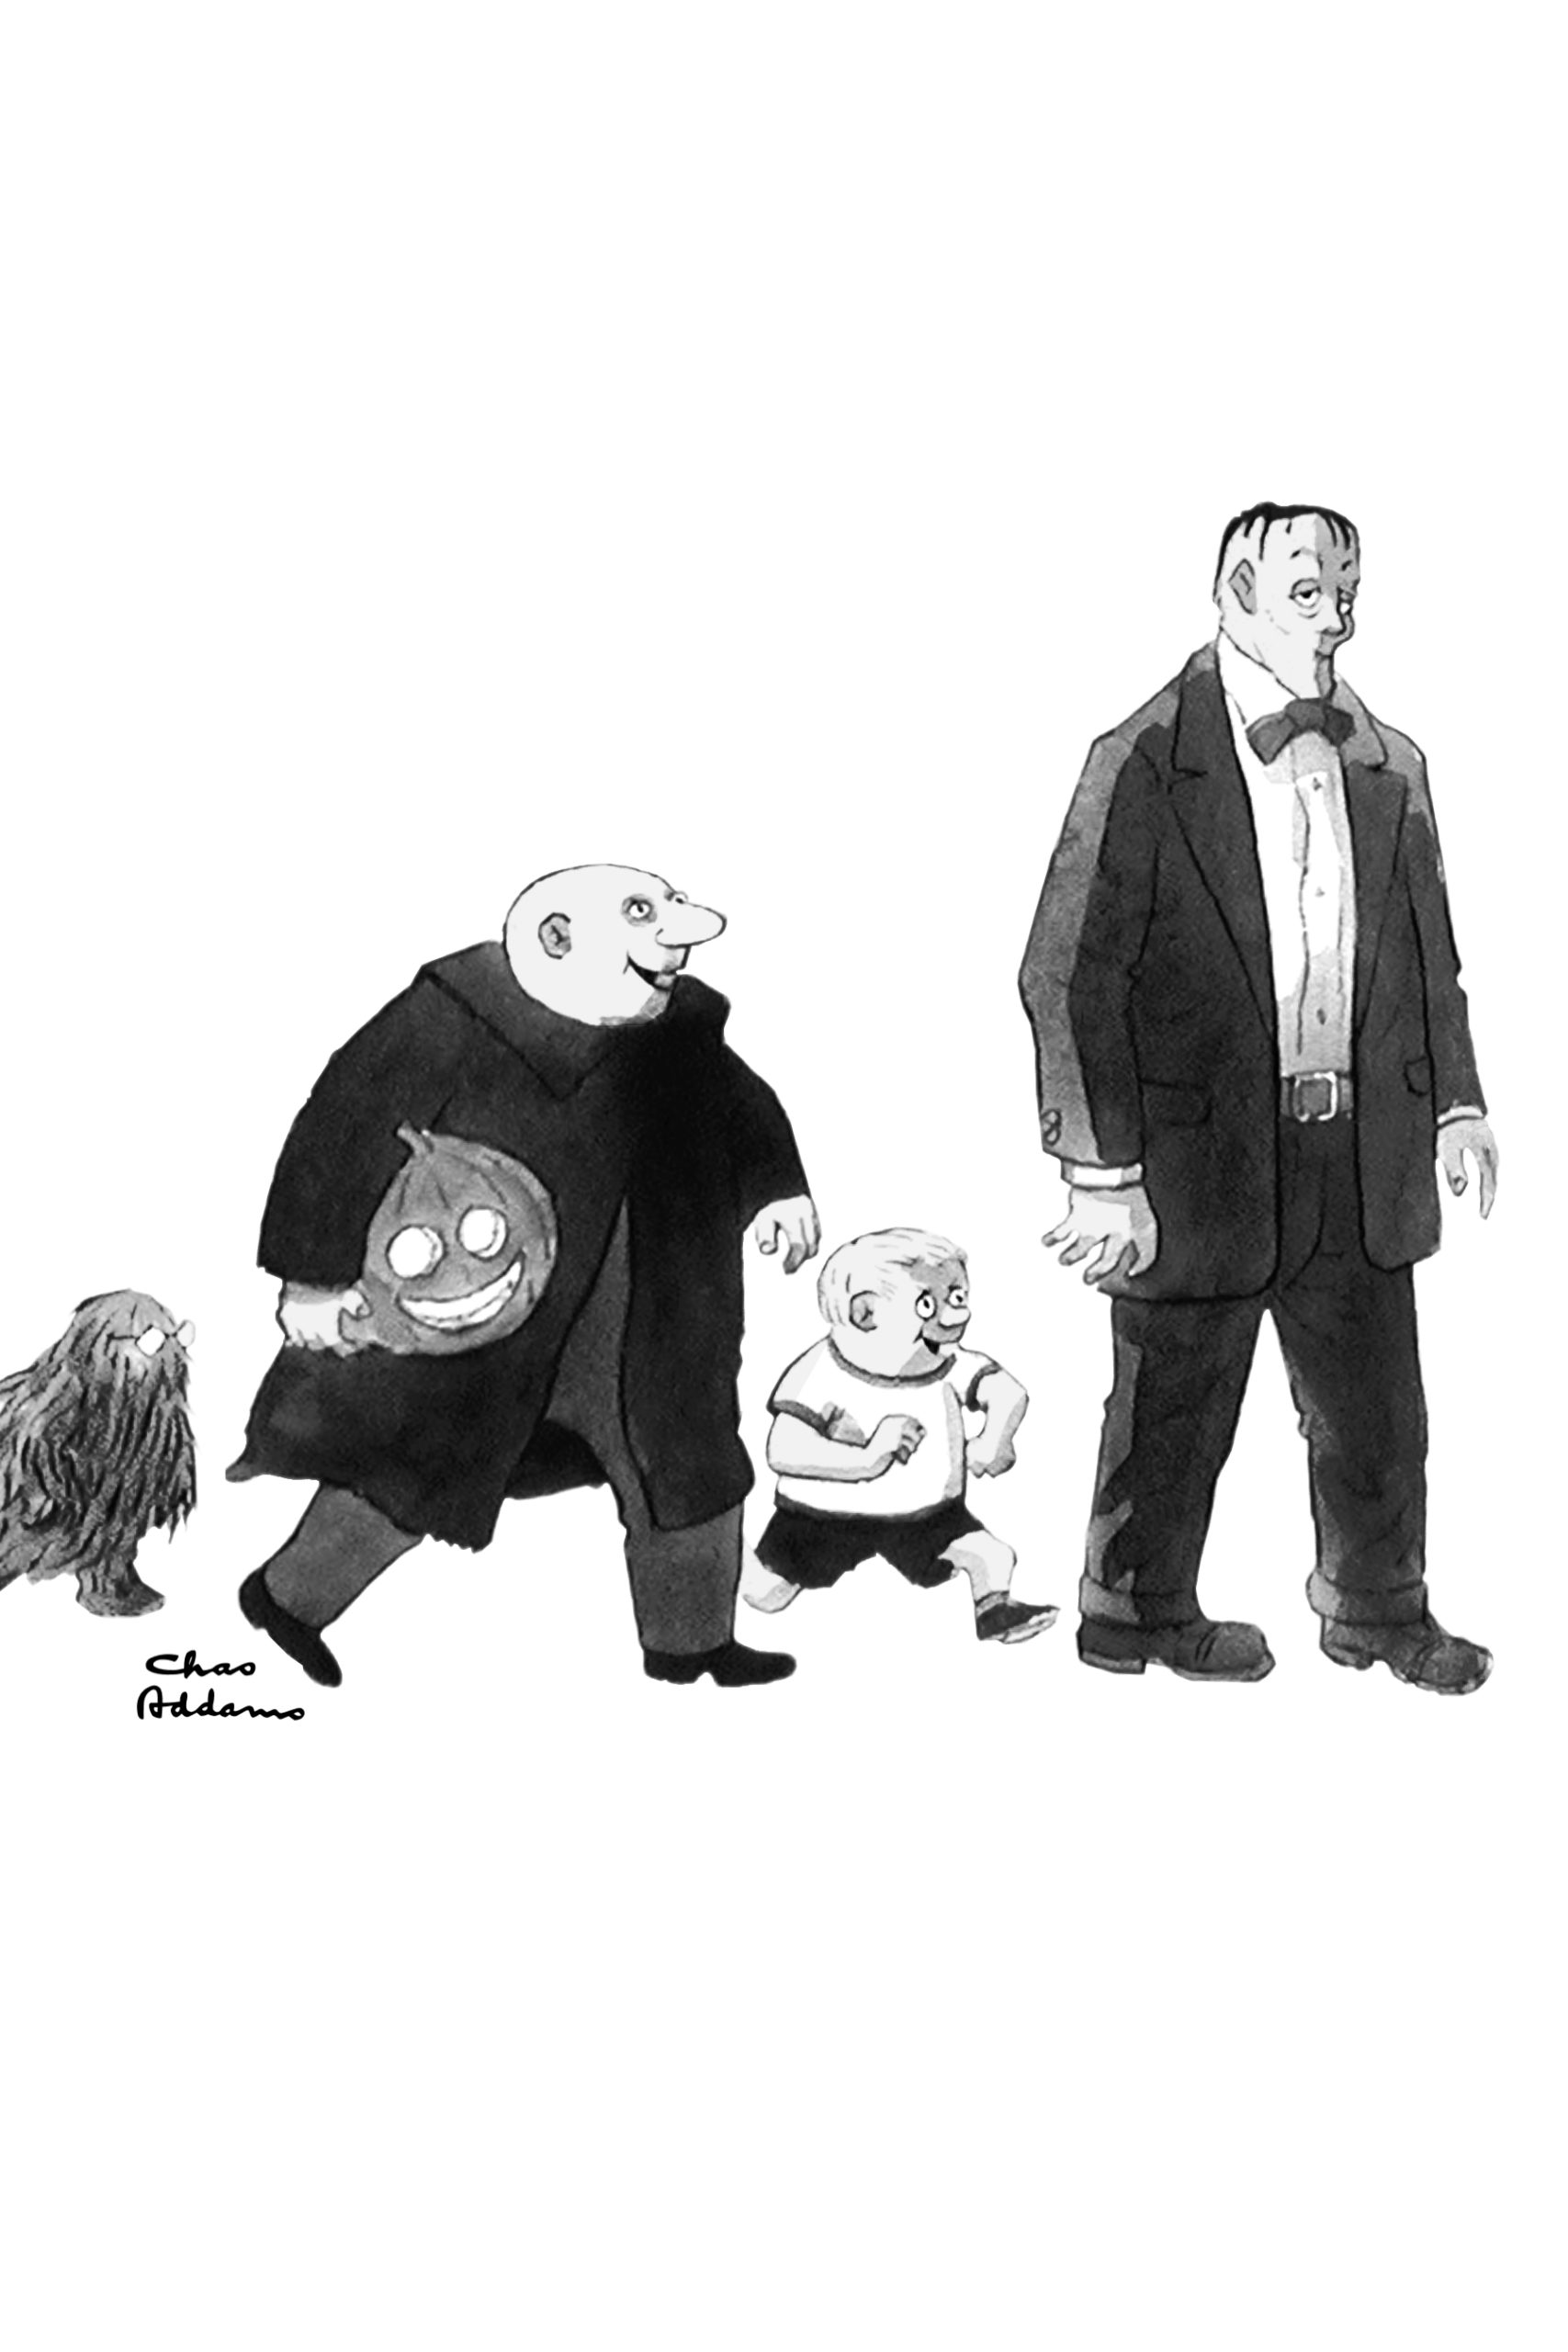 Cartoon characters created by Charles Addams.